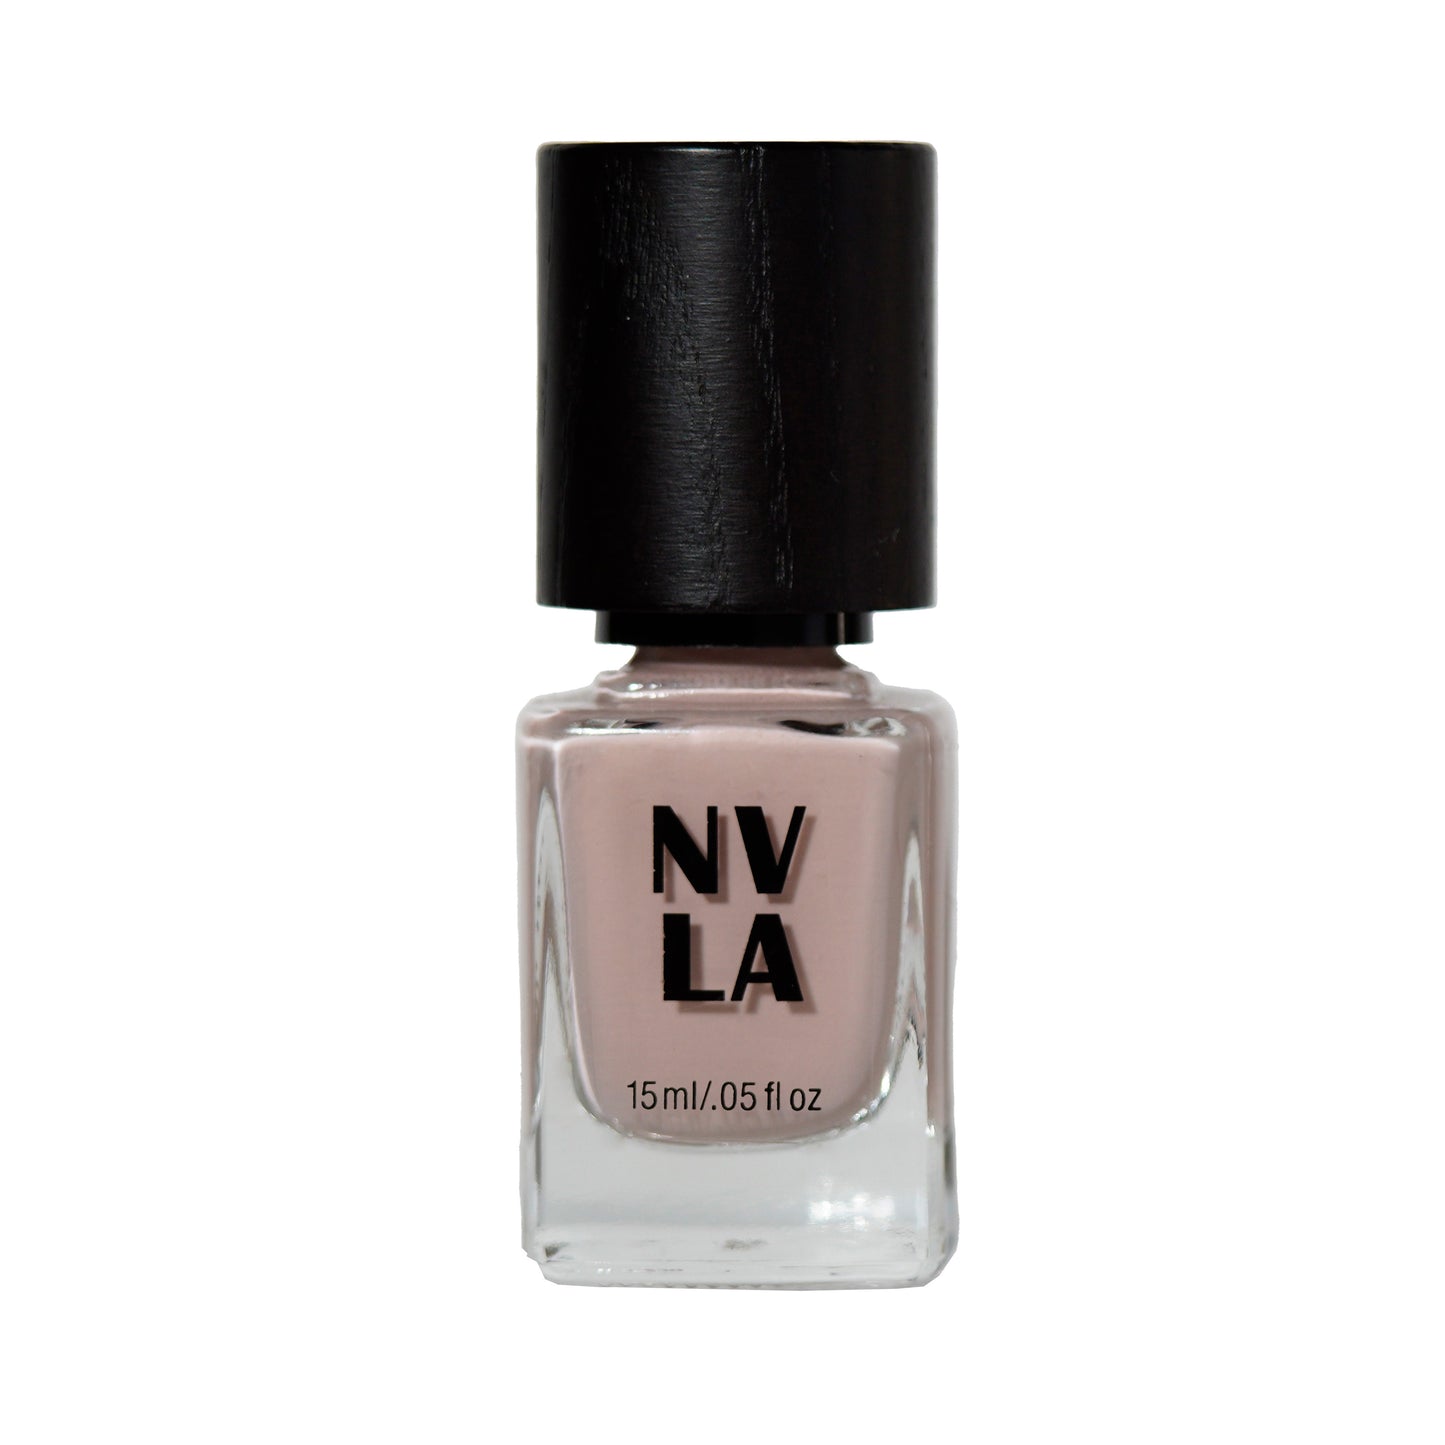 NVLA nail polish MS. HONEYS HONEY opaque creme